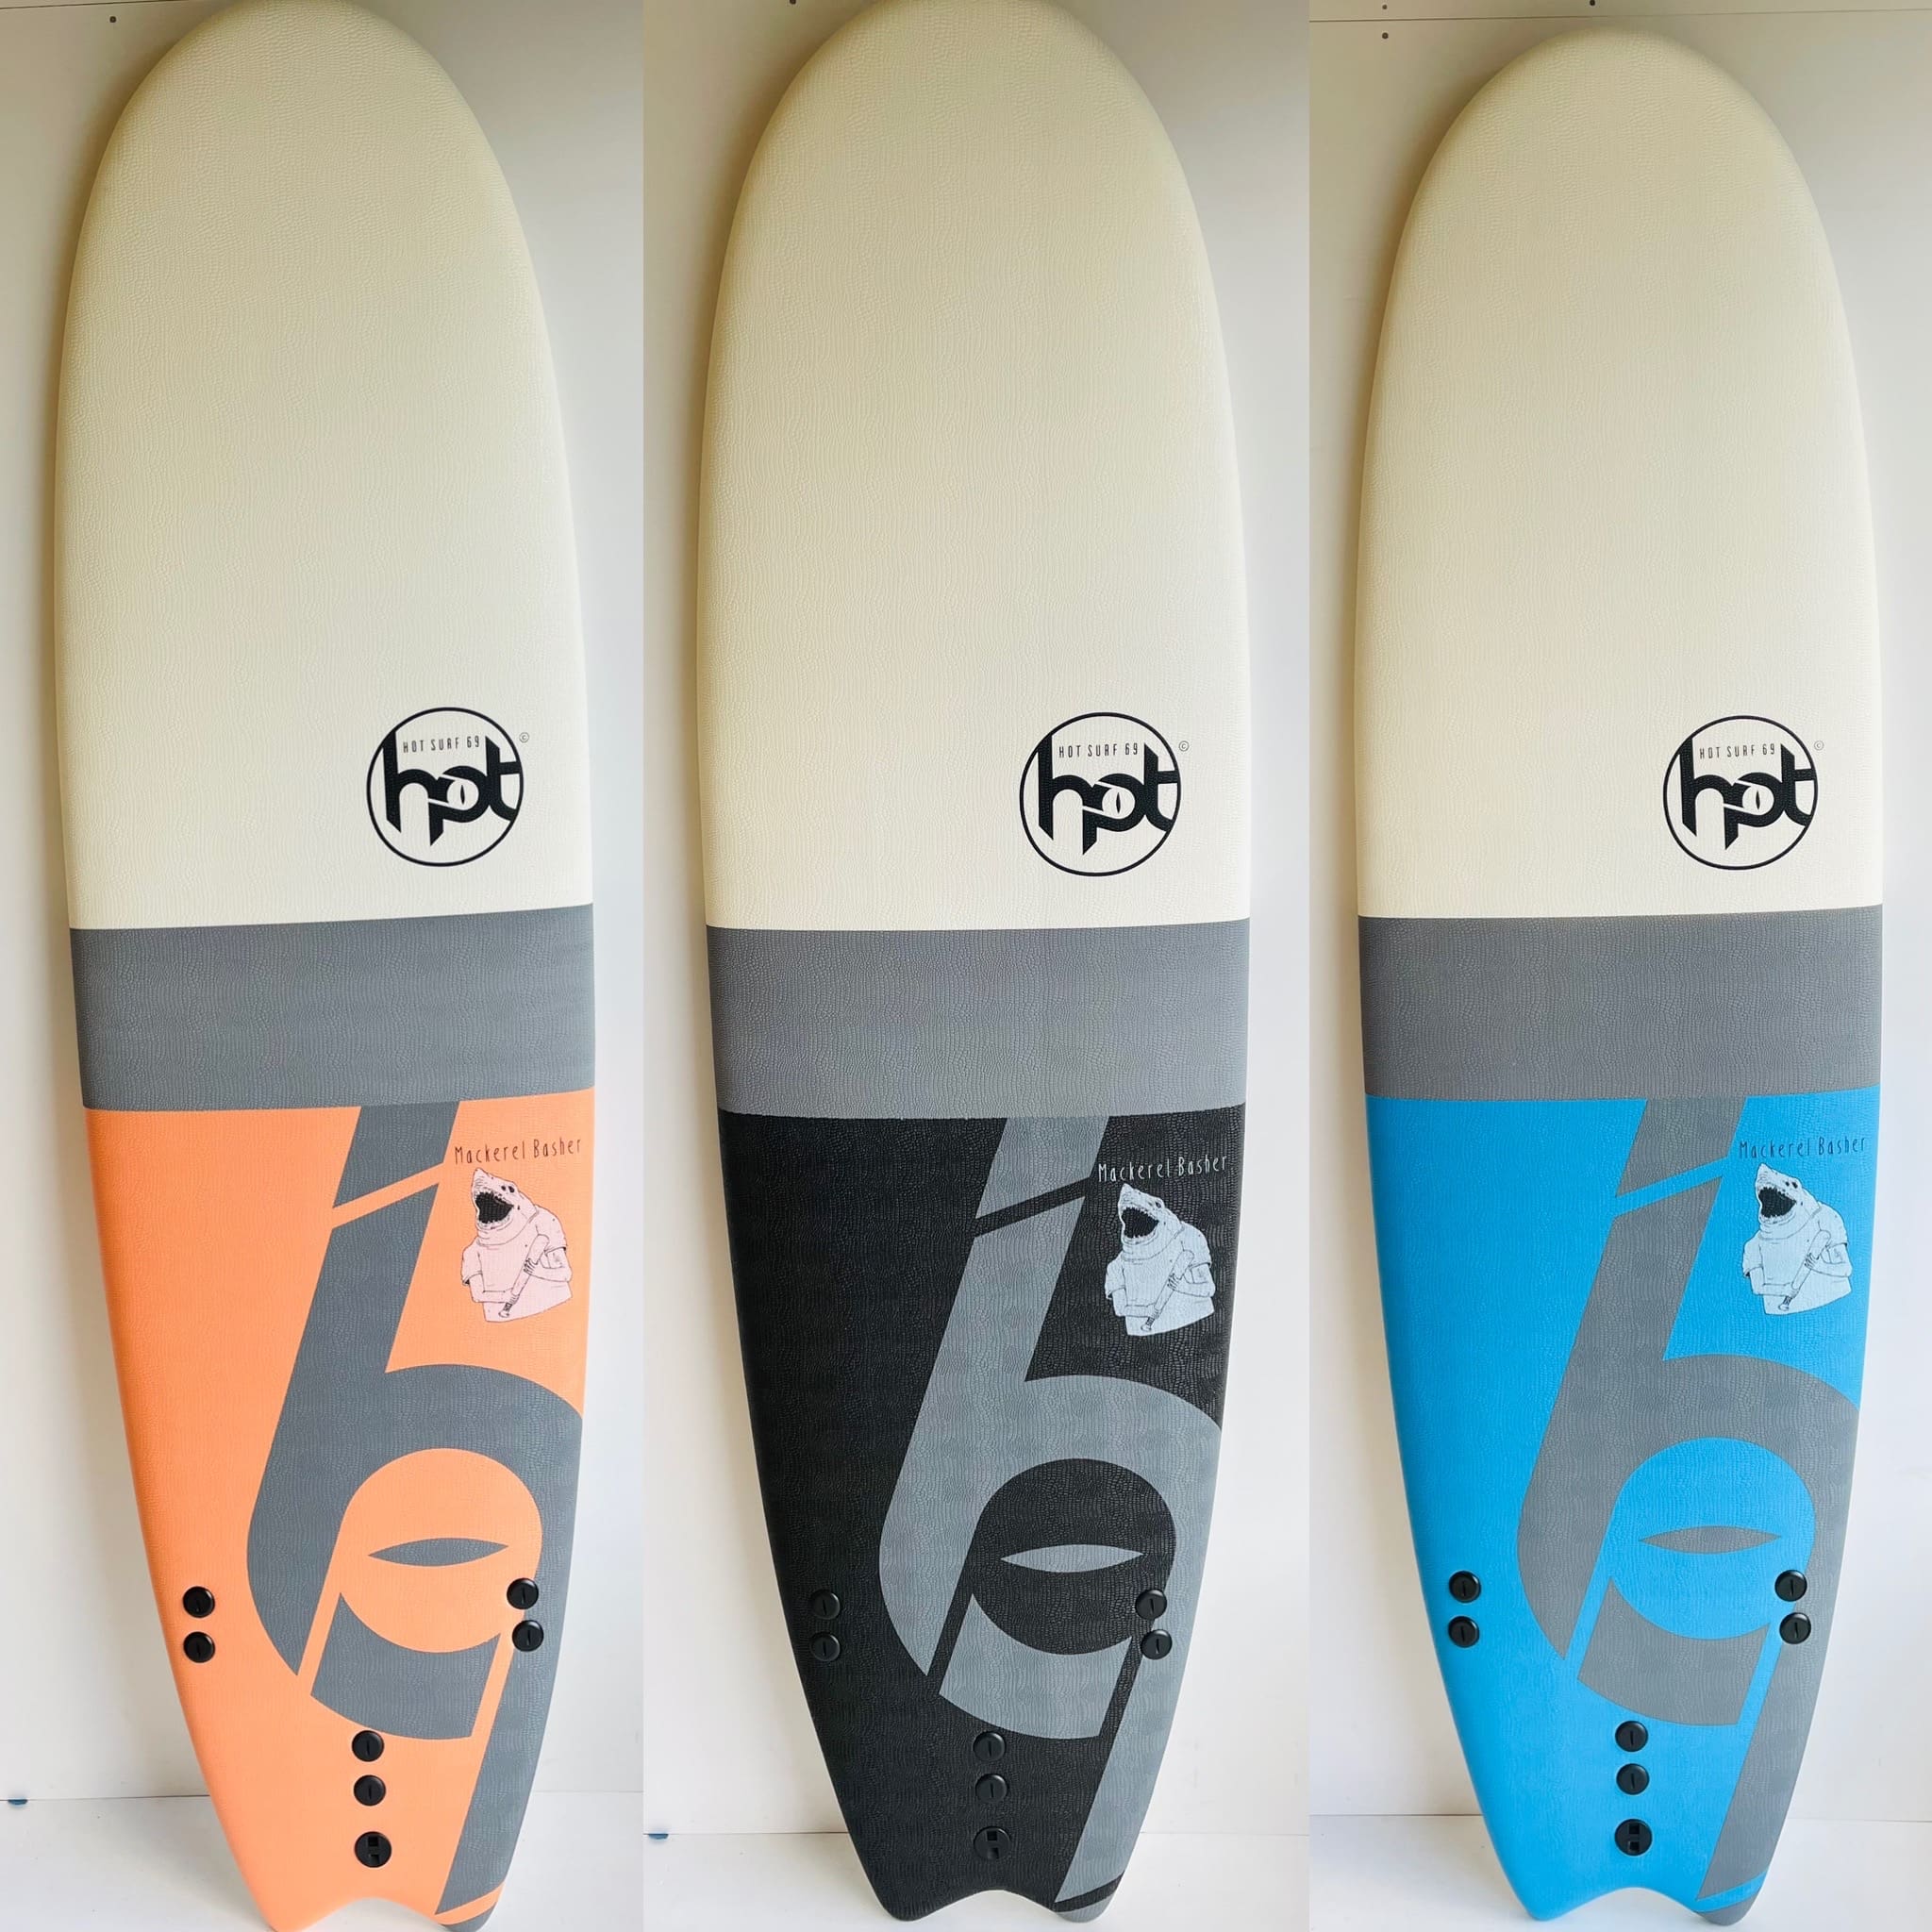 6"0 ft Softboard Hot surf 69 Bunyip Bandits Foam Surfboard Fish inc Fins/Leash 